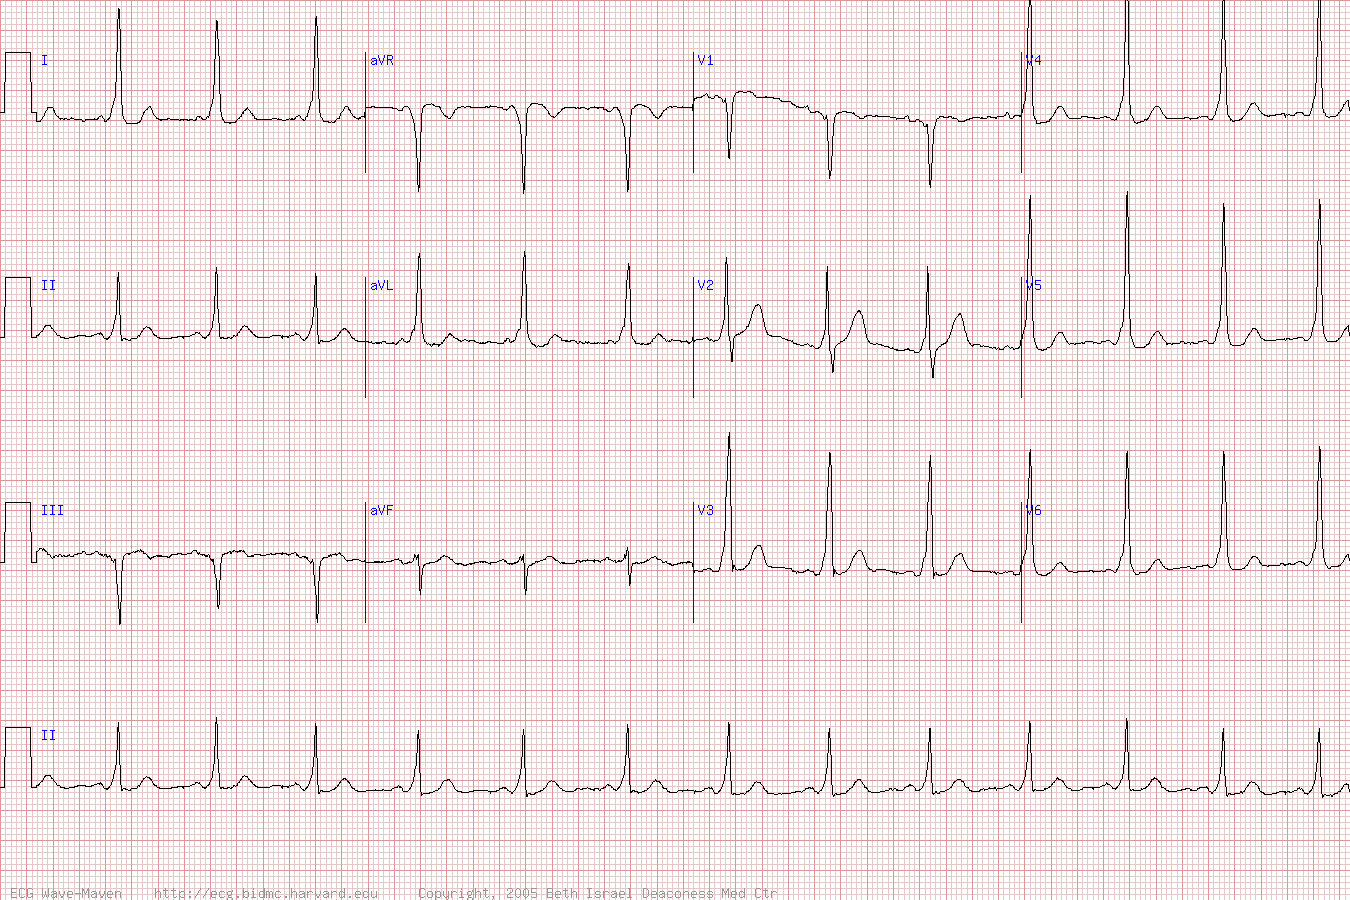 Пример кардиограммы с синдромом WPW.